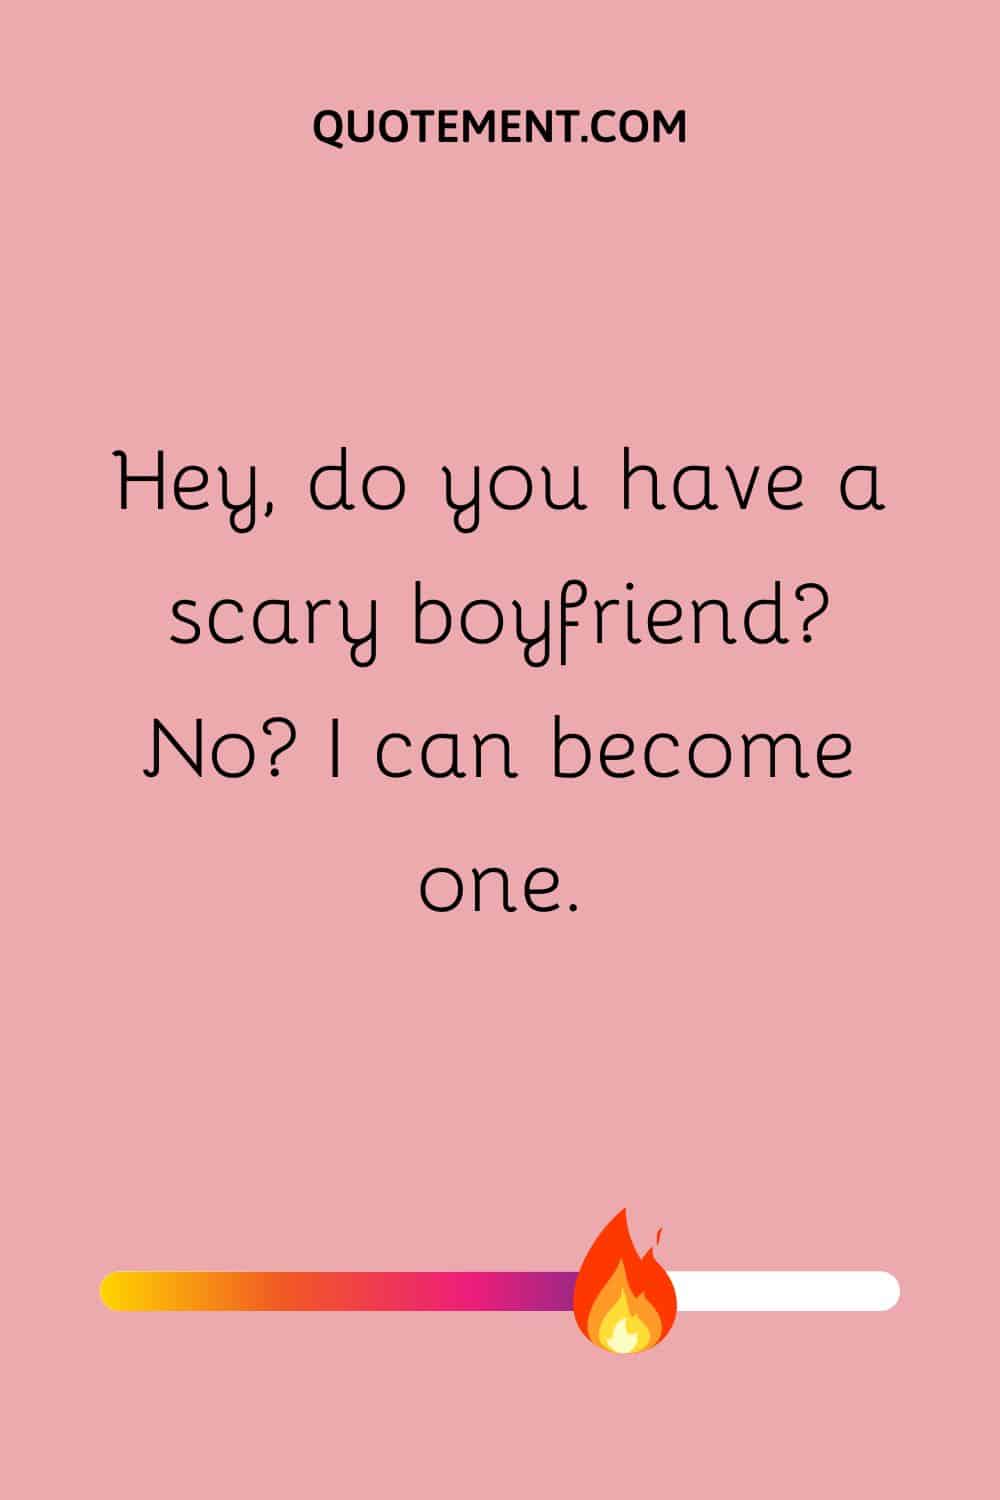 Hey, do you have a scary boyfriend